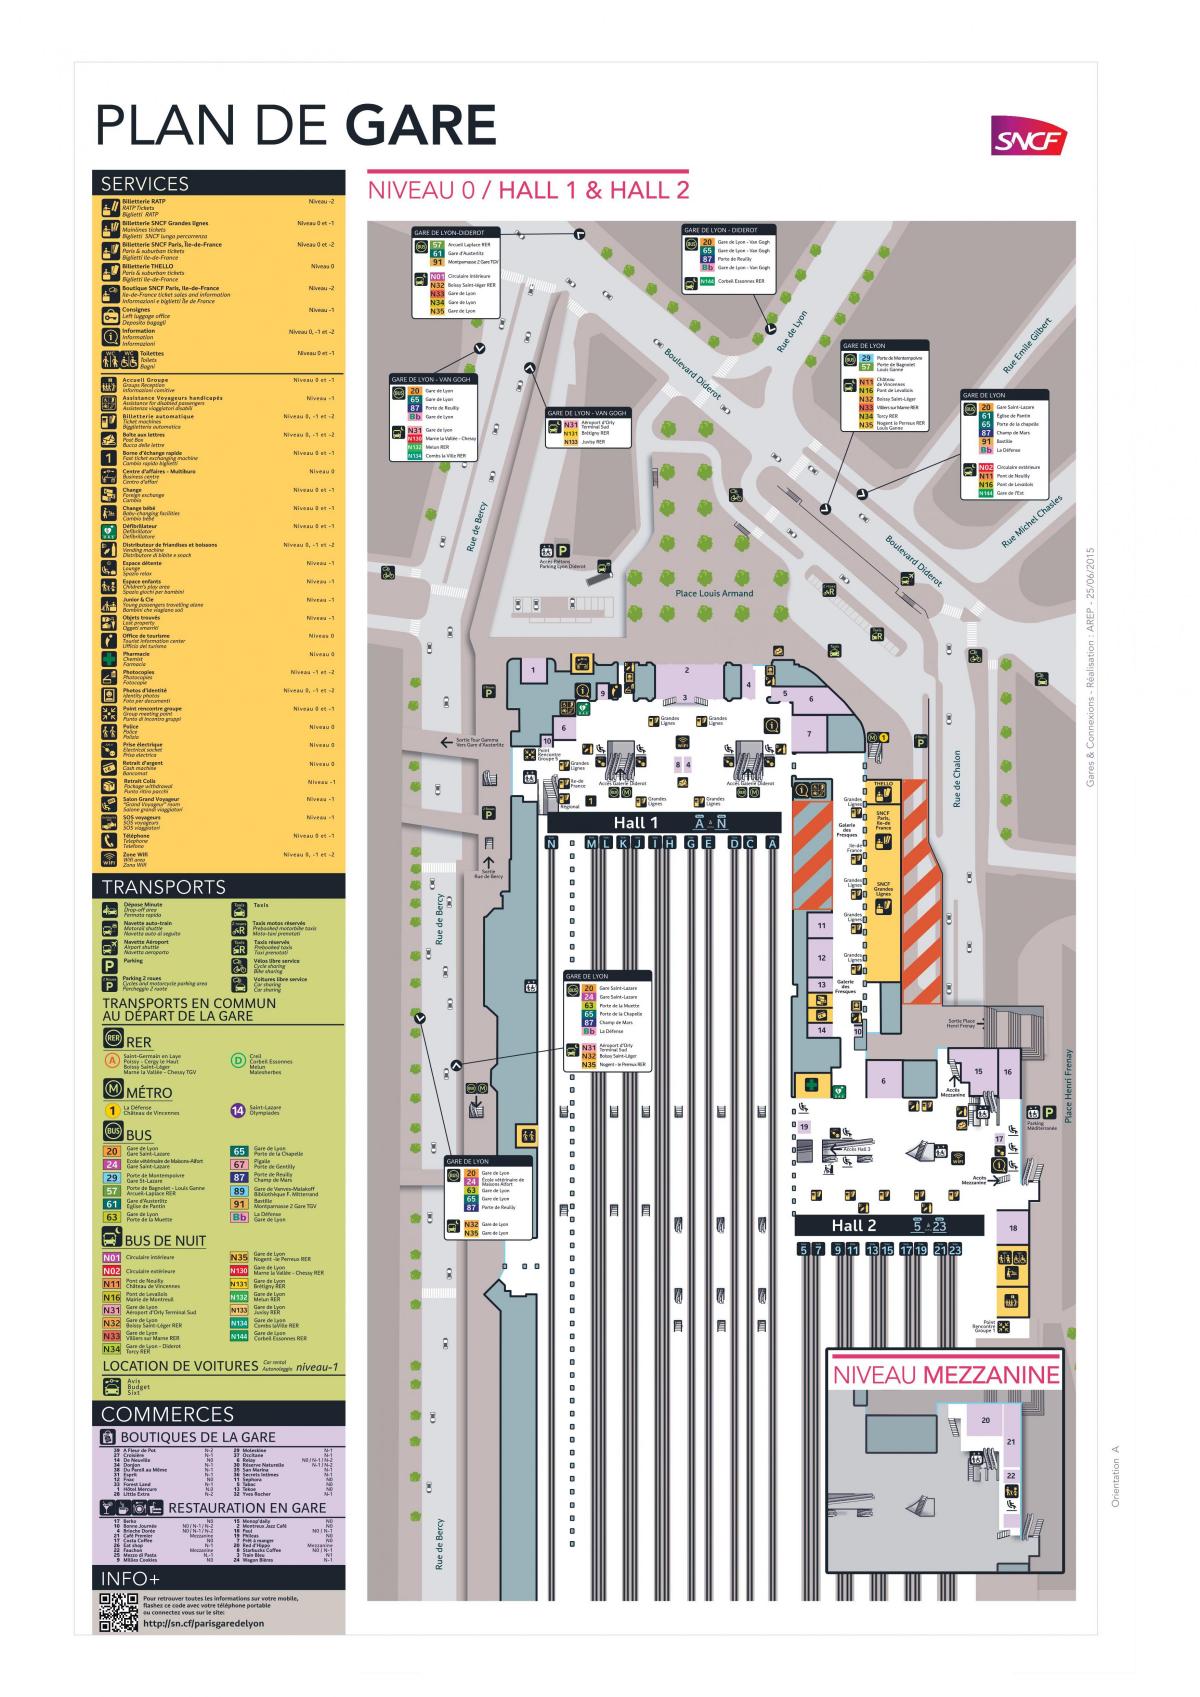 Map of Paris-Gare de Lyon